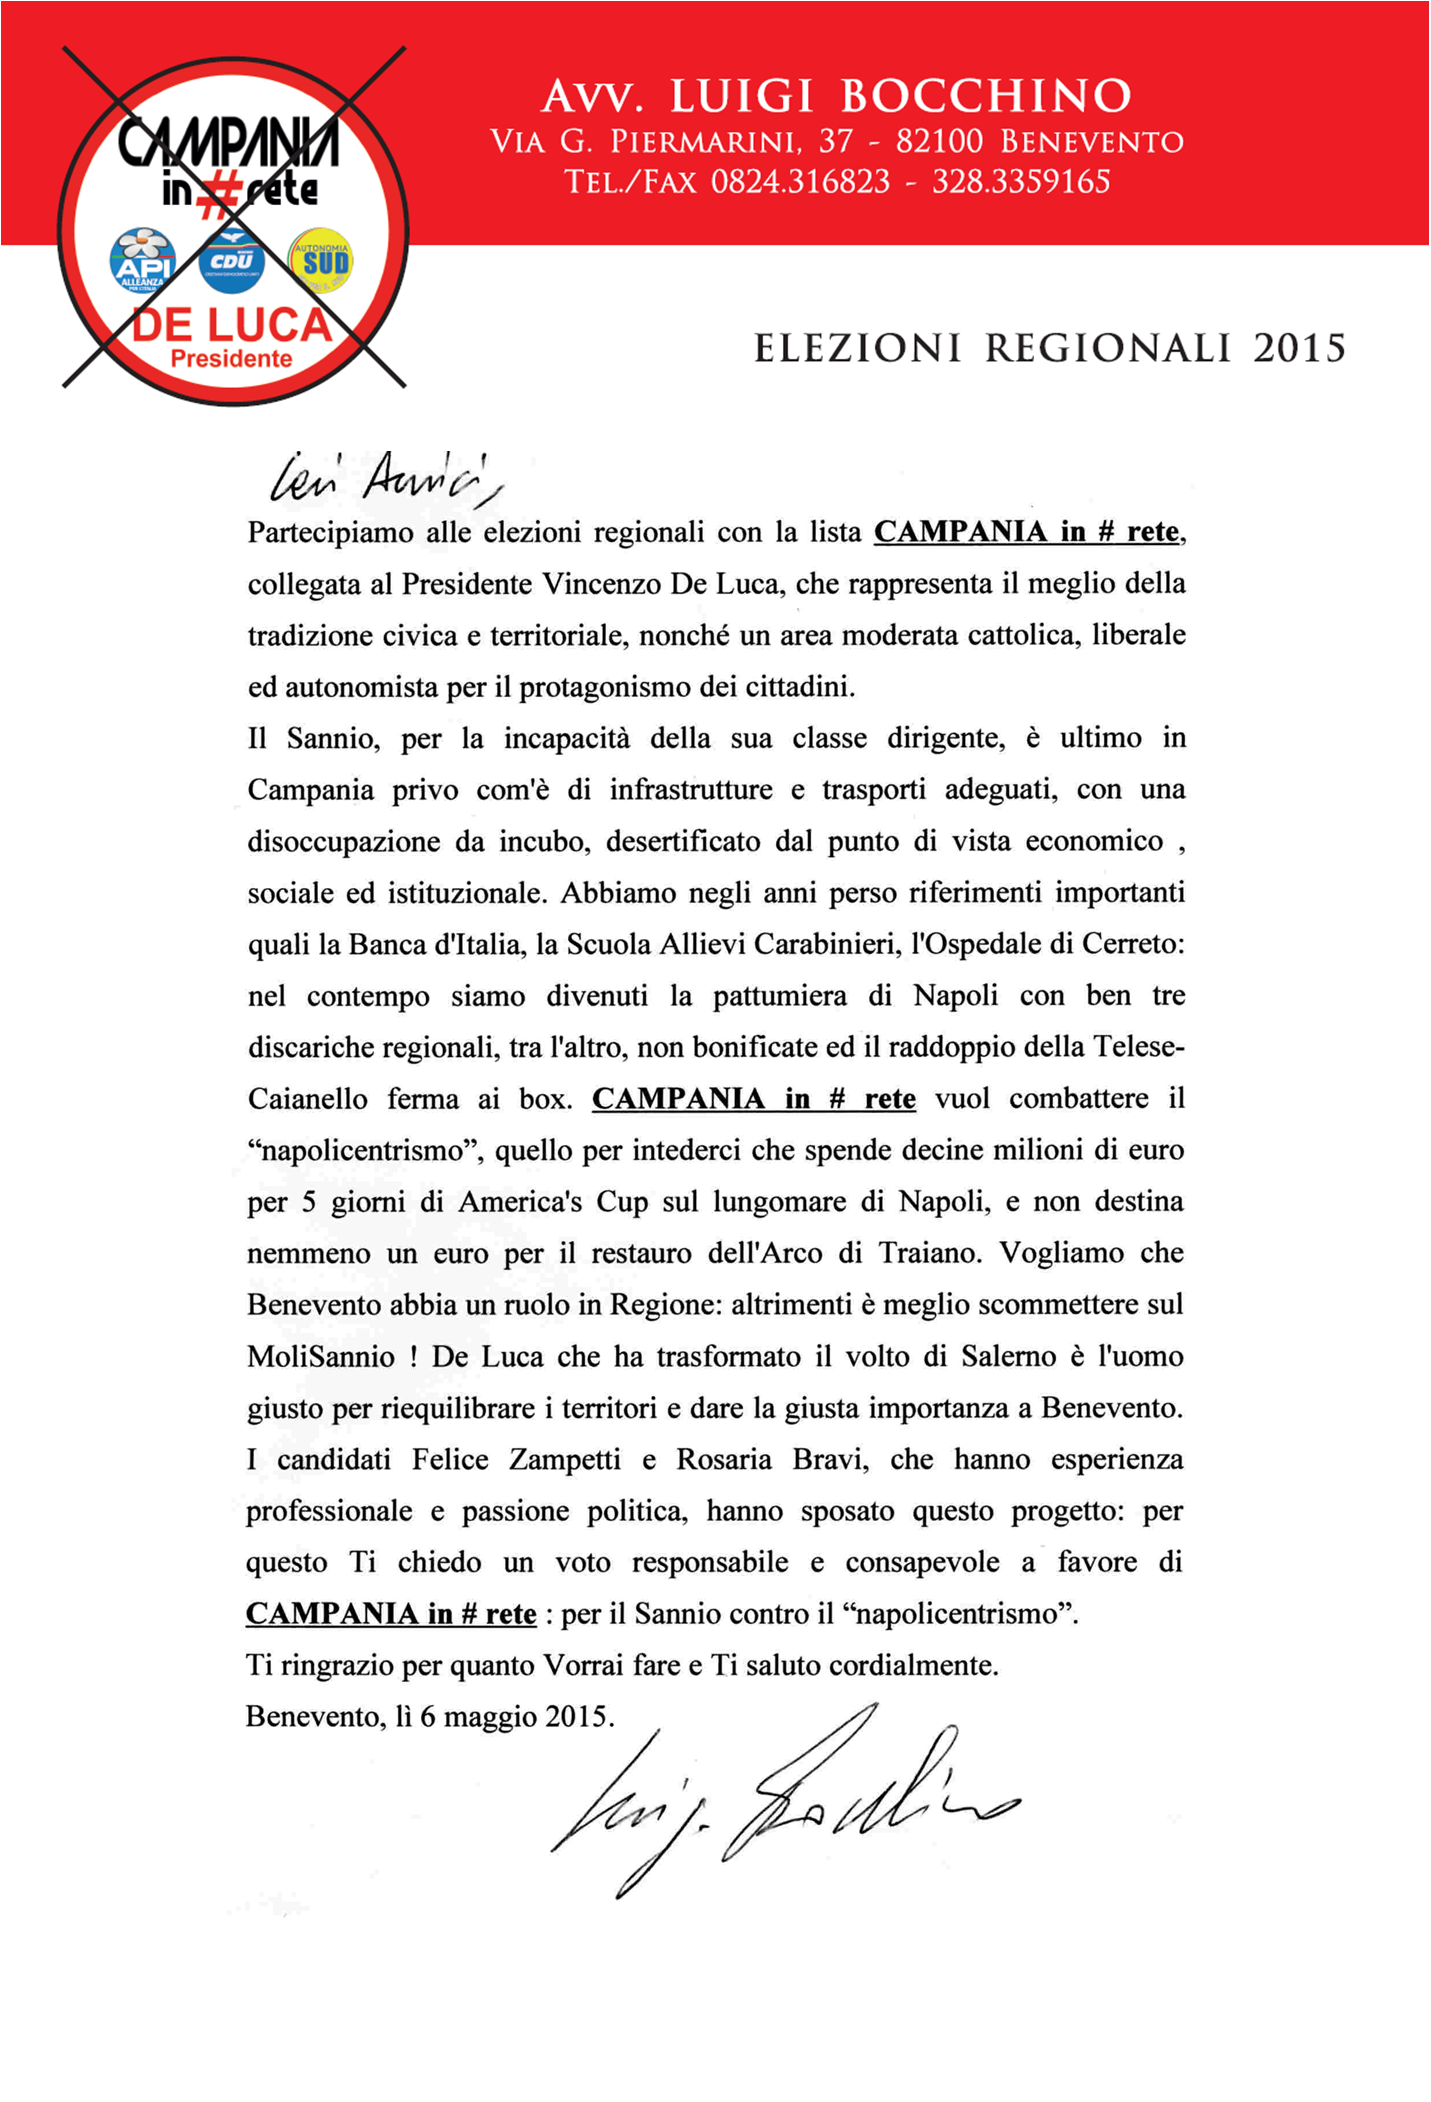 CampaniaInRete_Comunicato_CRC2015